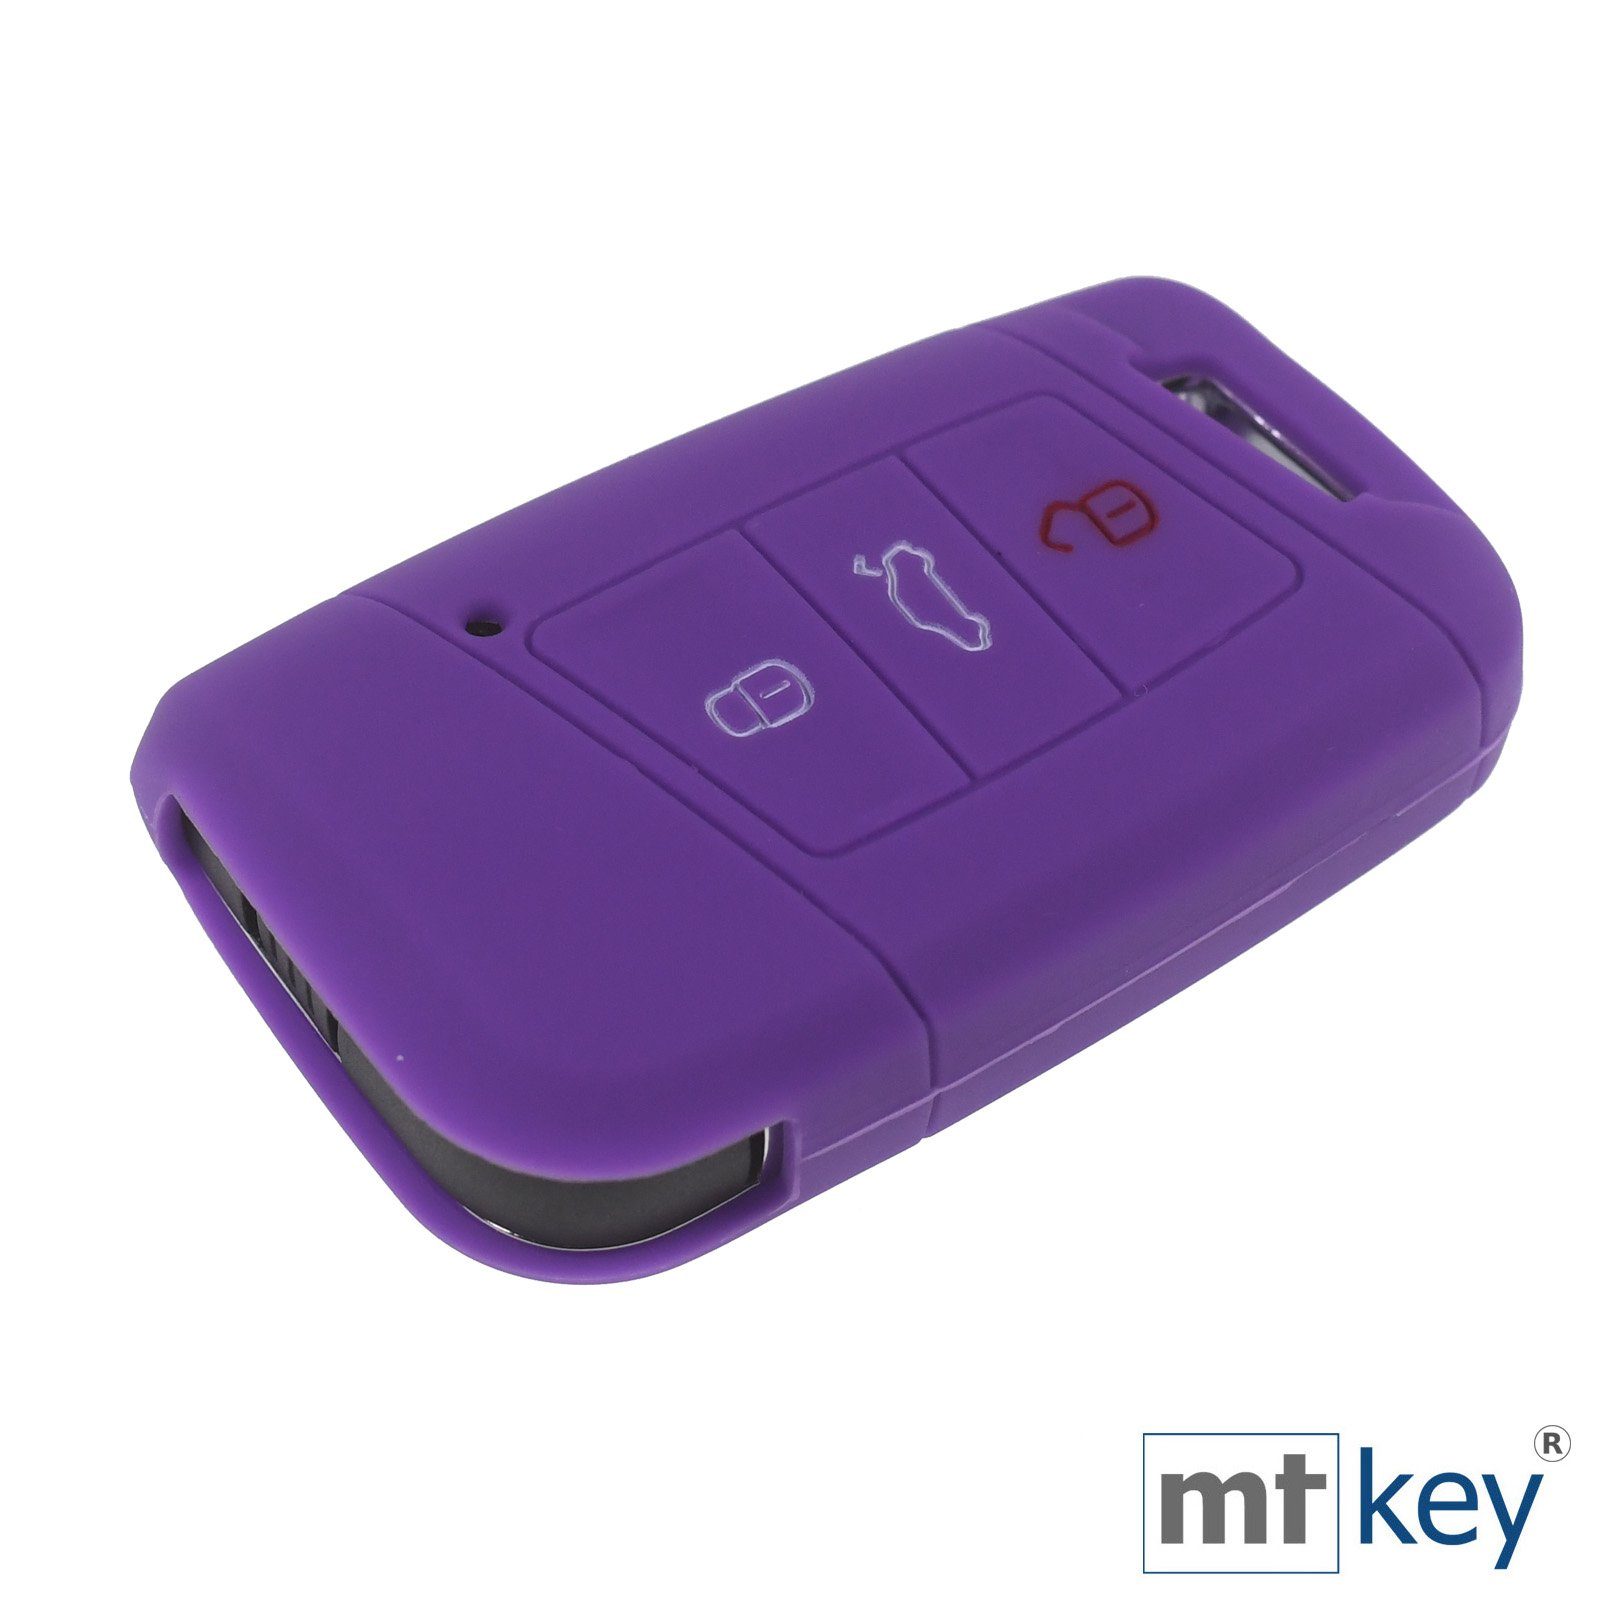 VW B8 Kodiaq Softcase SMARTKEY Silikon Skoda mt-key Schlüsseltasche 3 KEYLESS Lila, für Schutzhülle Arteon Passat Autoschlüssel Tasten